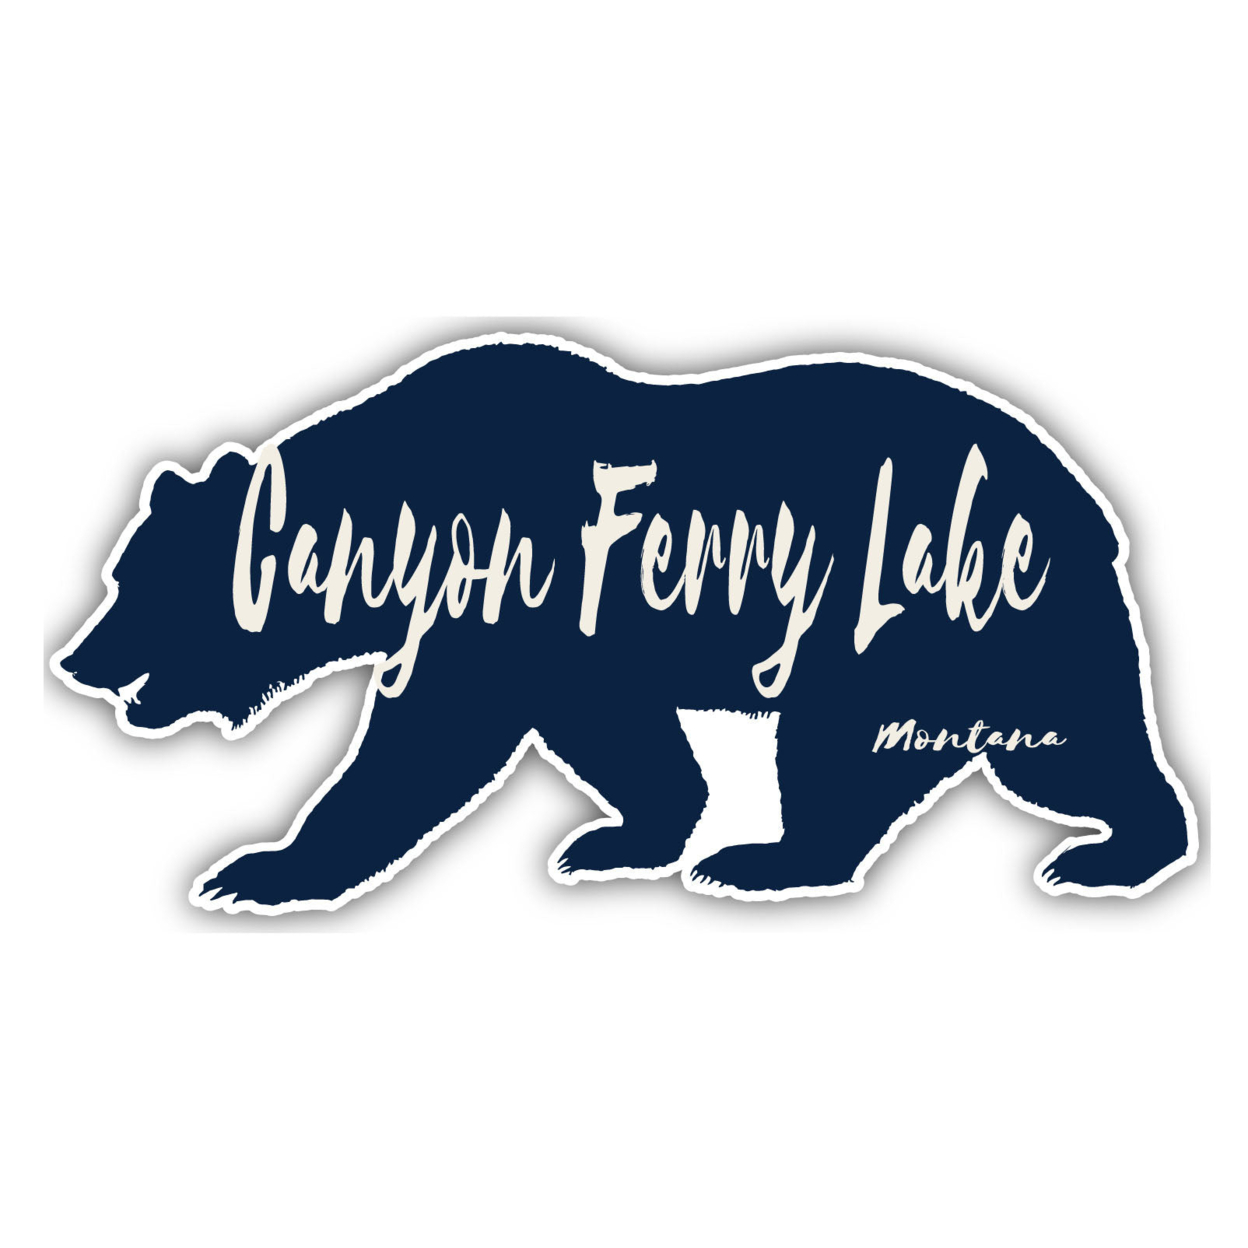 Canyon Ferry Lake Montana Souvenir Decorative Stickers (Choose Theme And Size) - Single Unit, 10-Inch, Bear